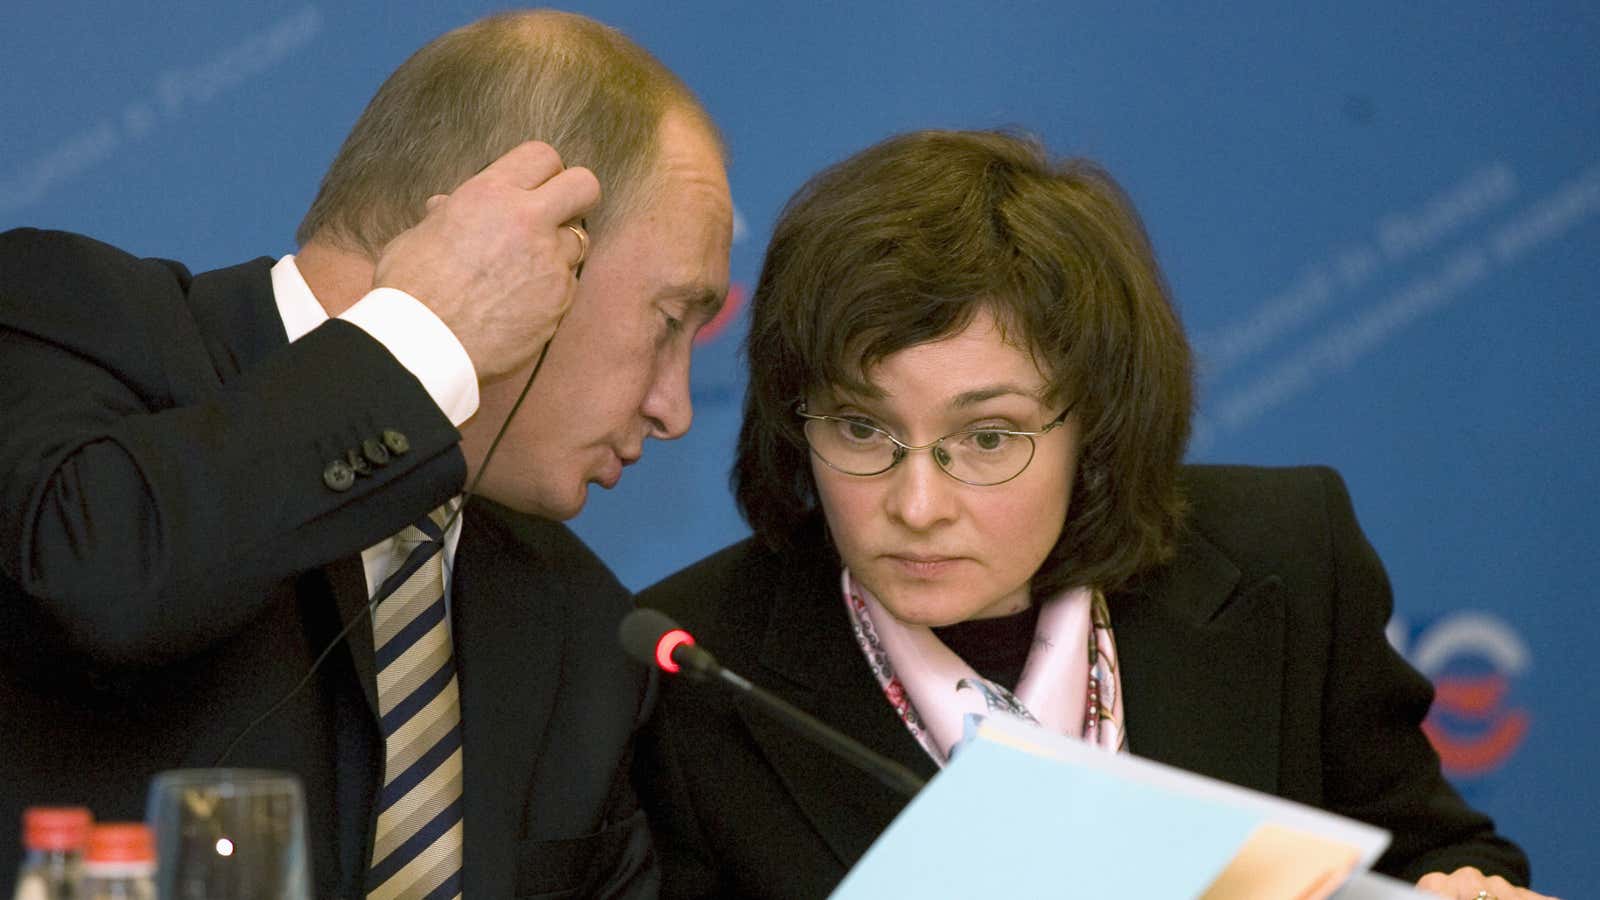 Vladimir Putin offers some advice to Russia central bank governor Elvira Nabiullina.